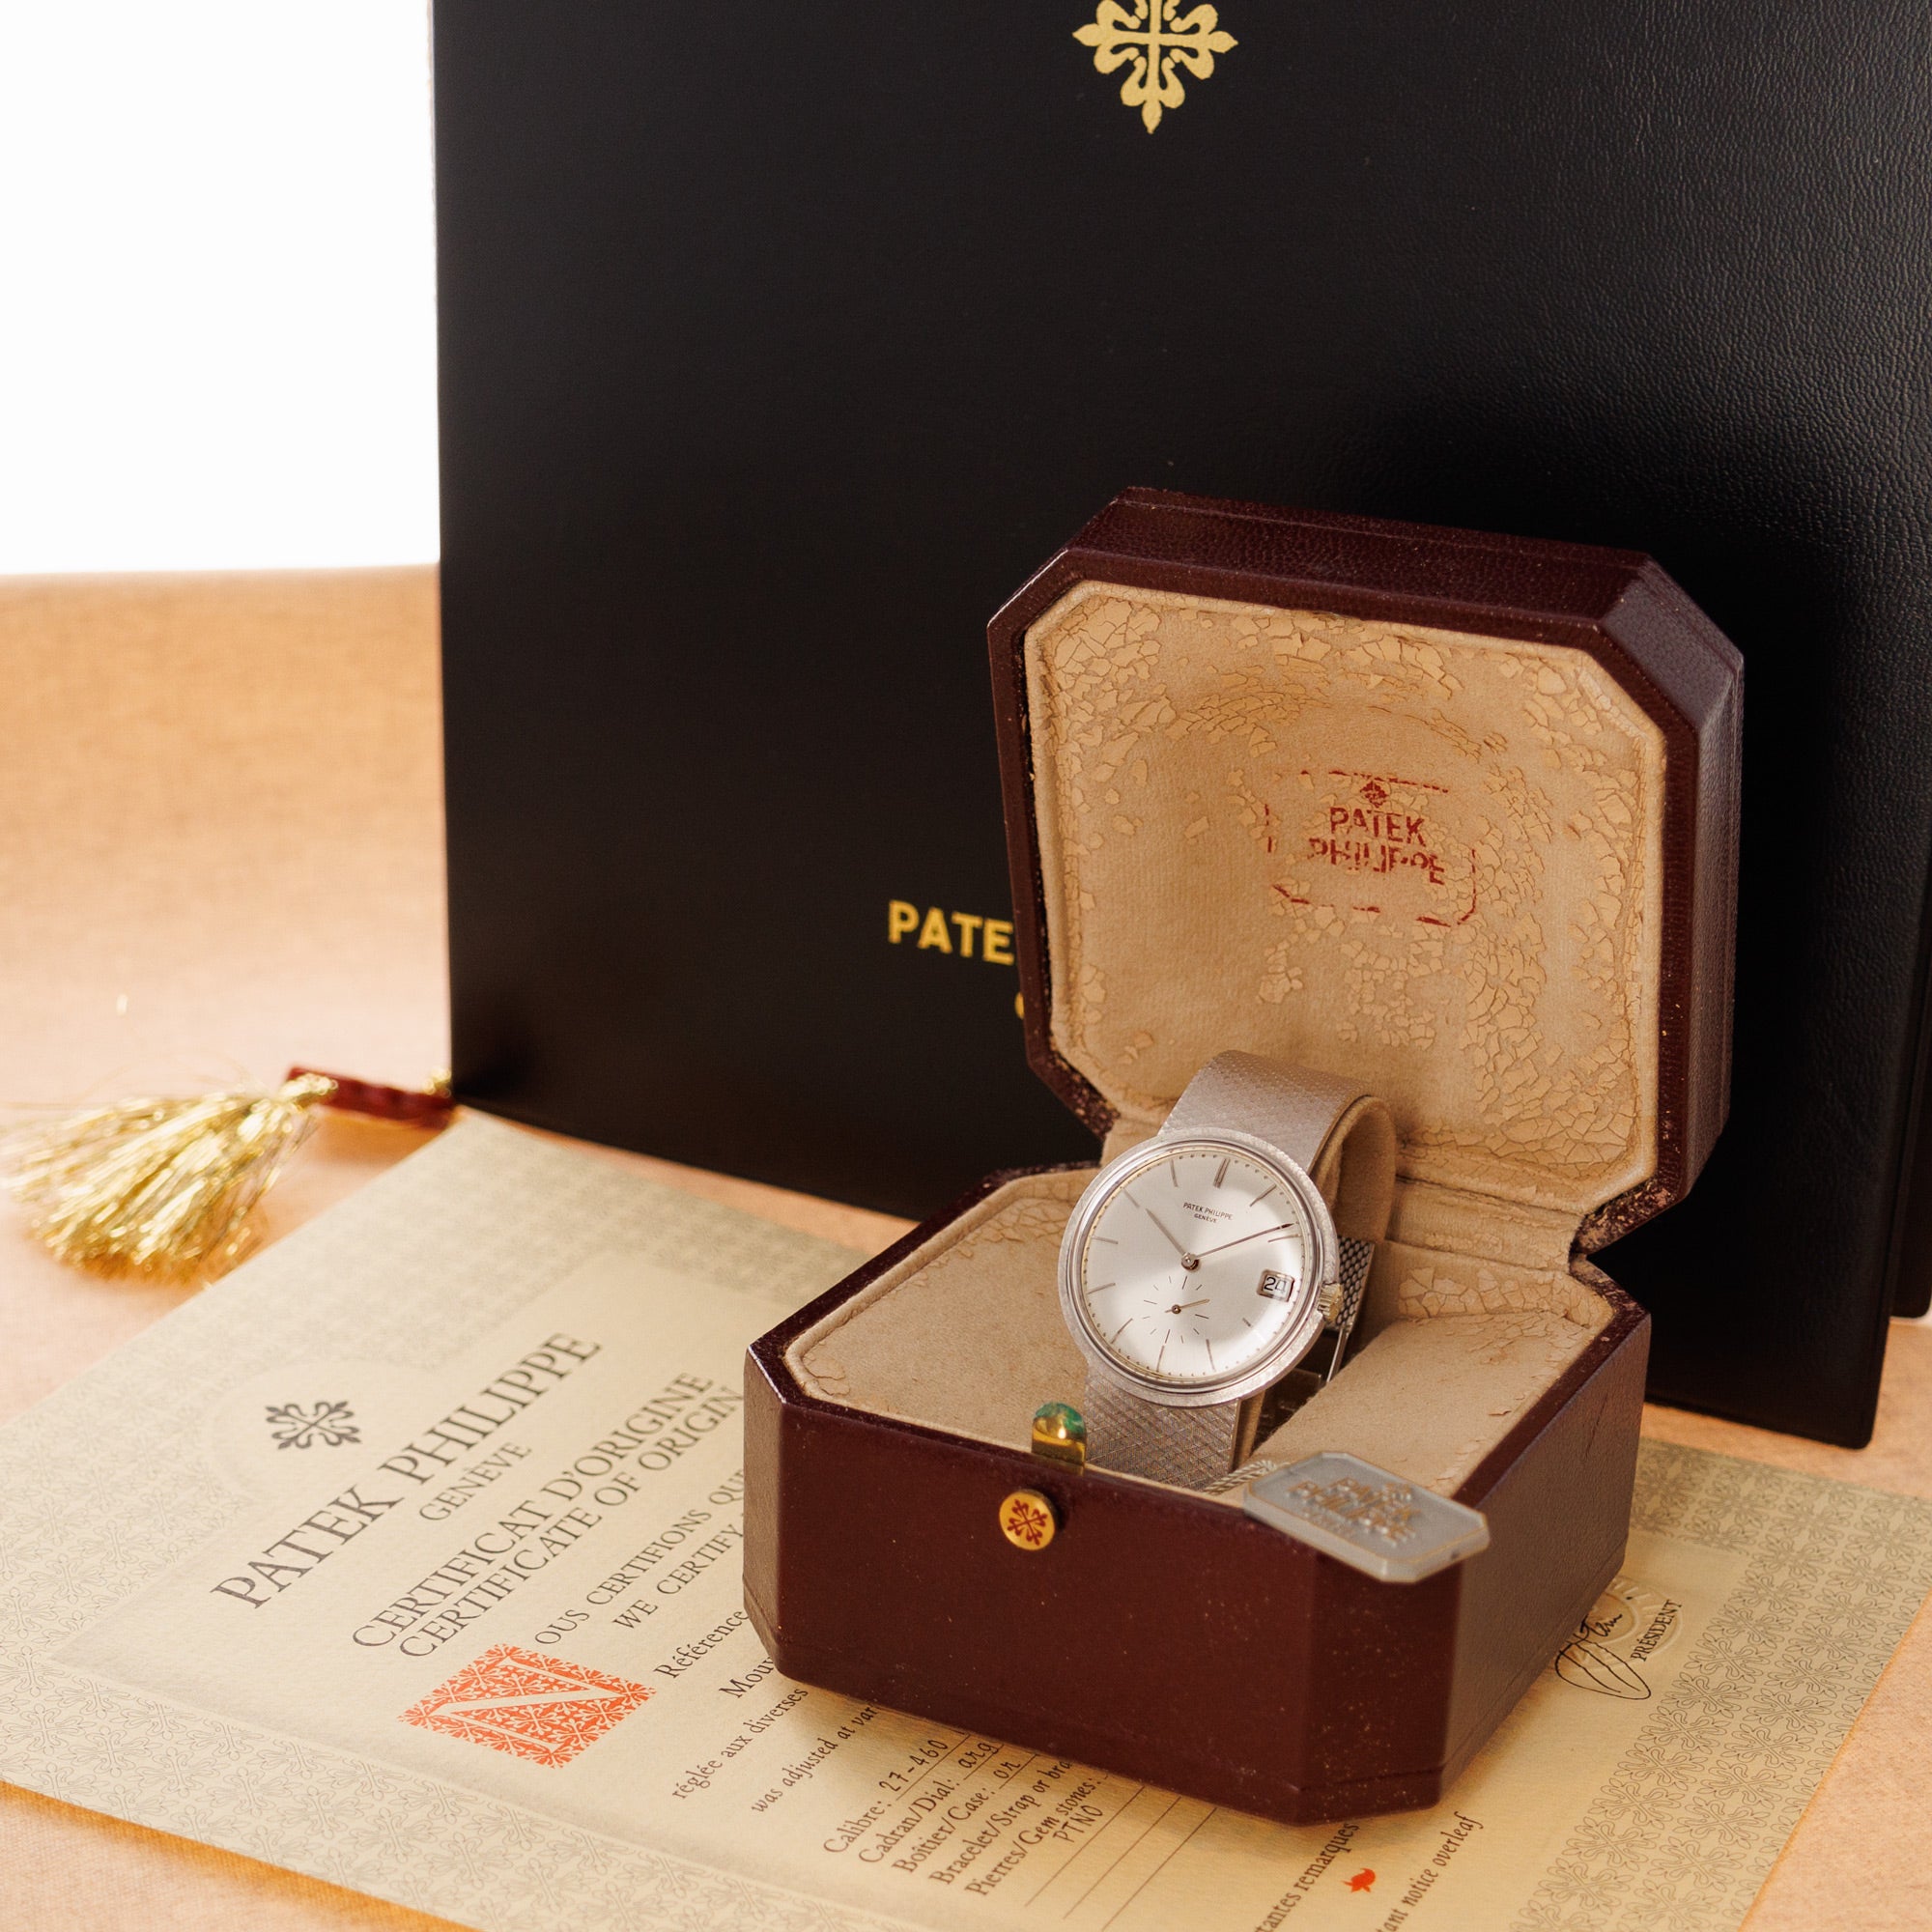 Patek Philippe - Patek Philippe White Gold Automatic Watch Ref. 3445 - The Keystone Watches